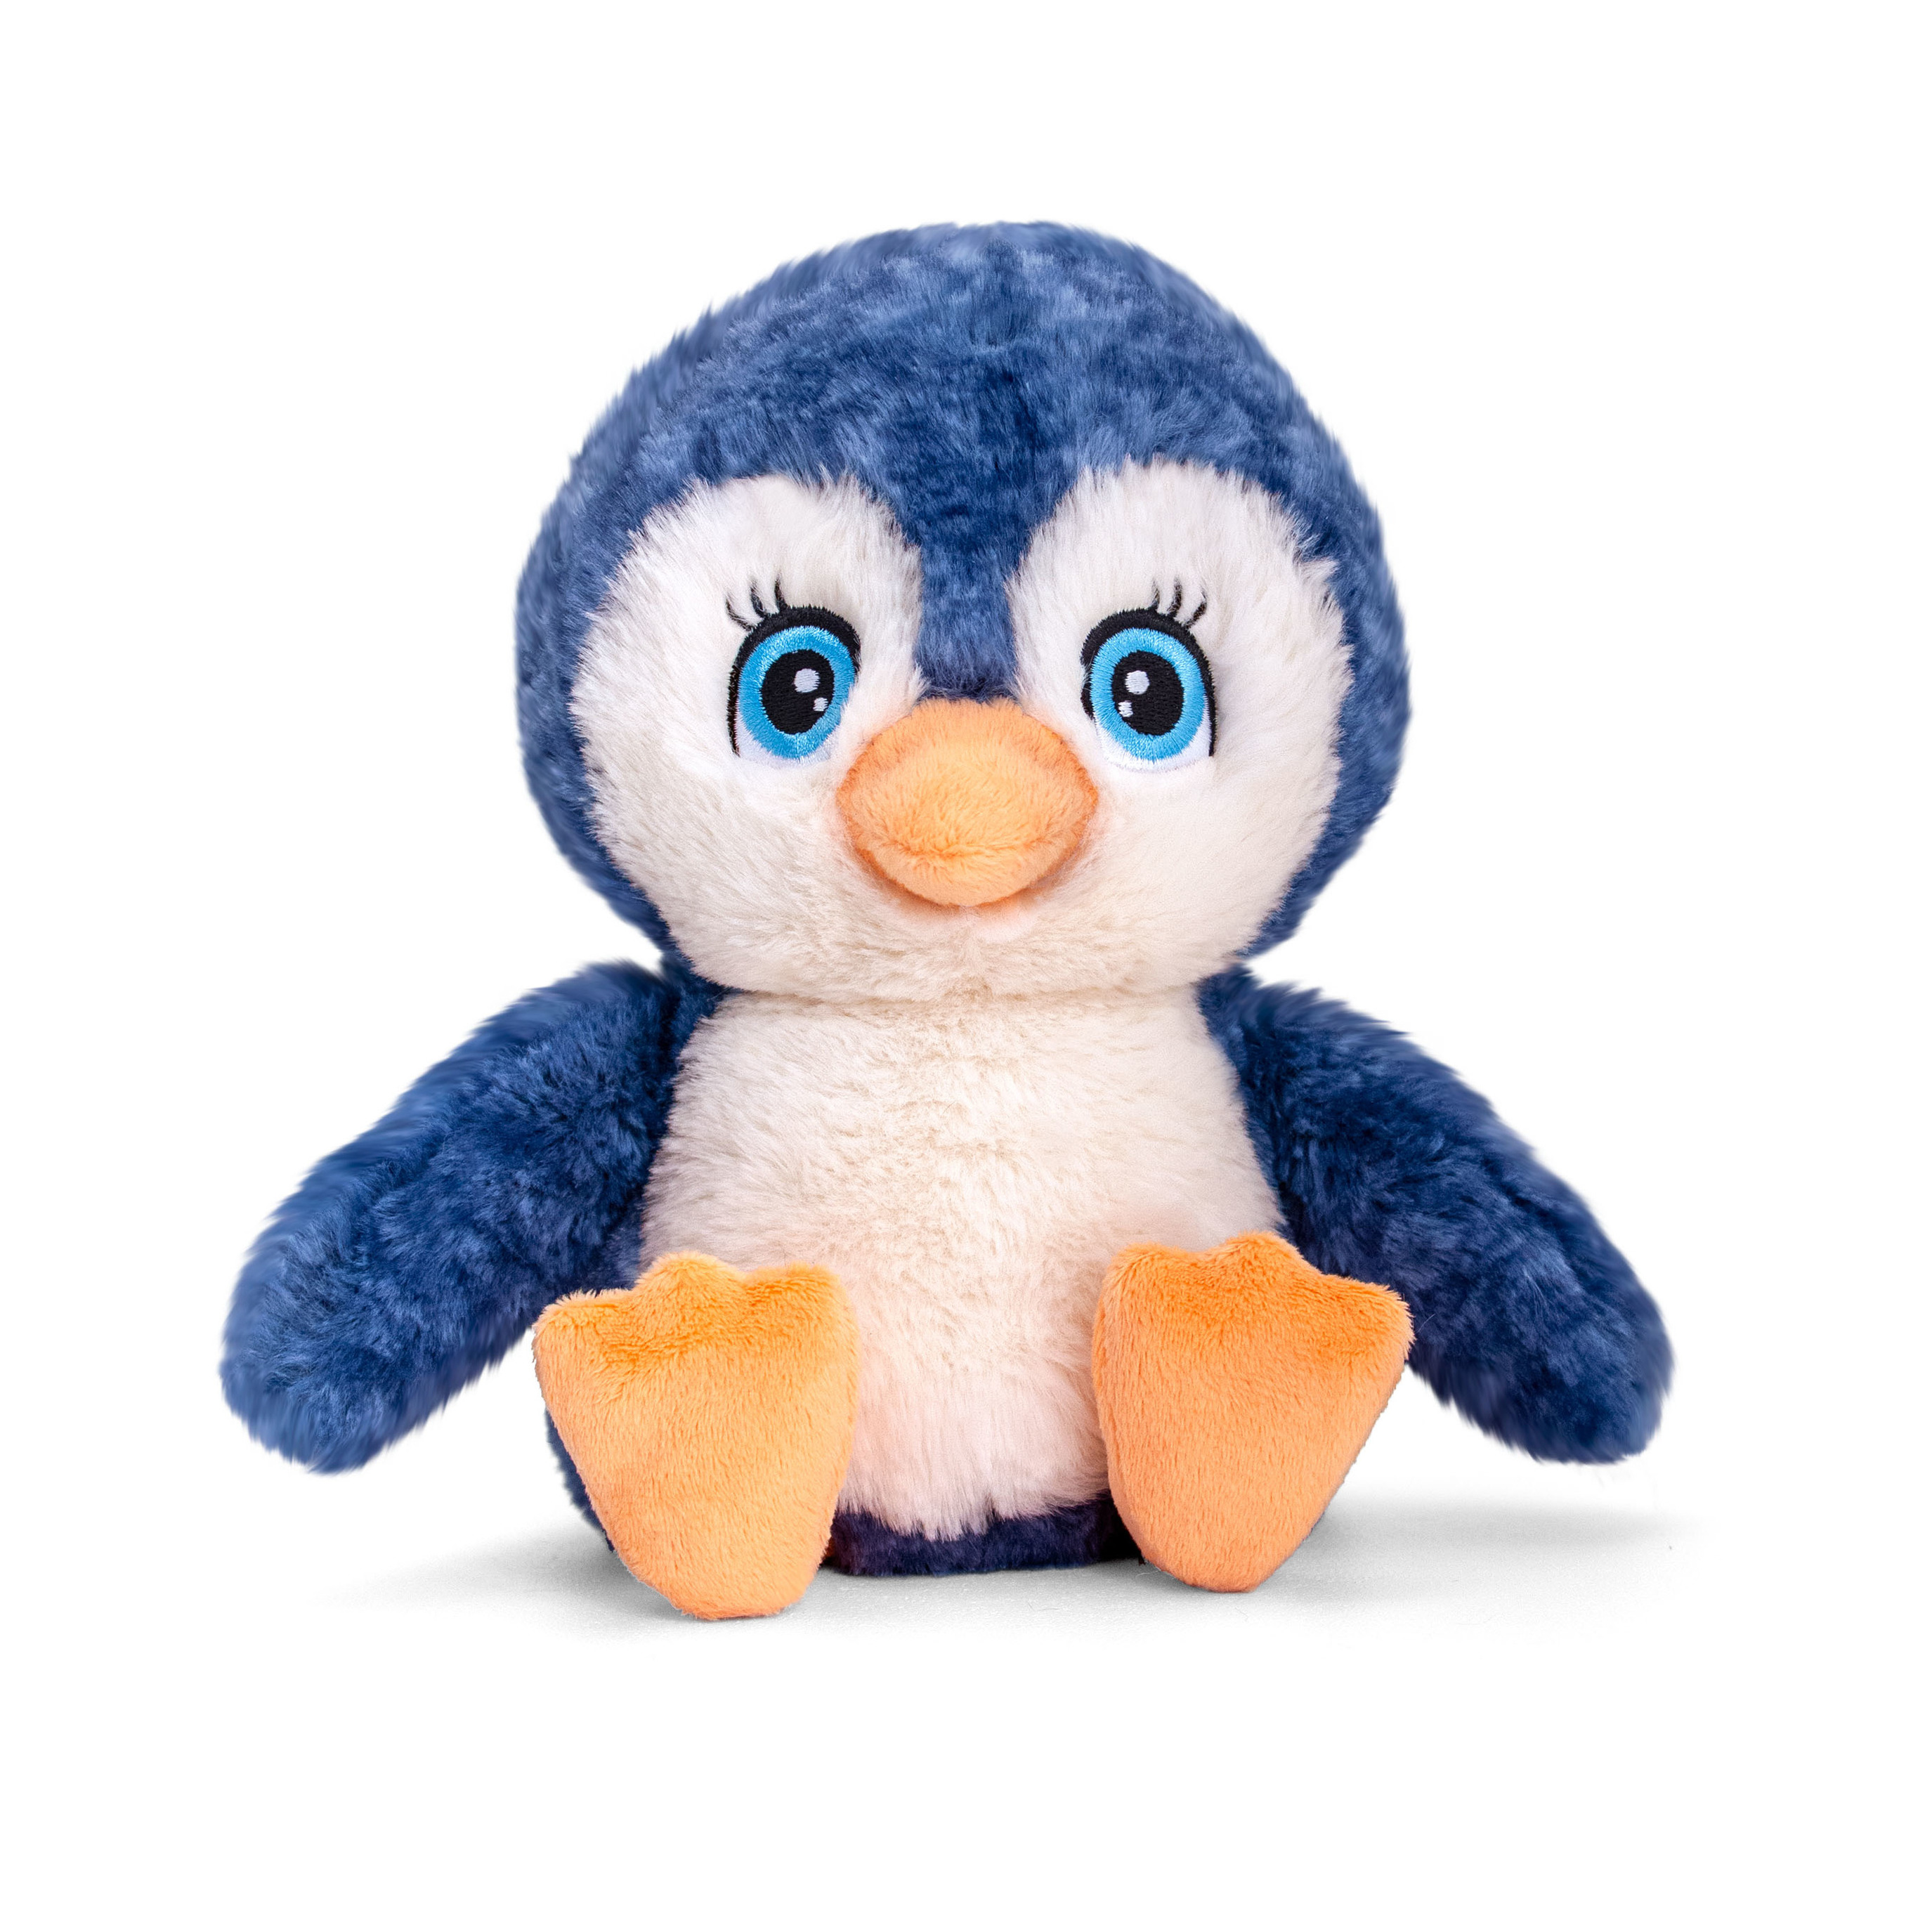 Pluche knuffel dier pinguin 25 cm